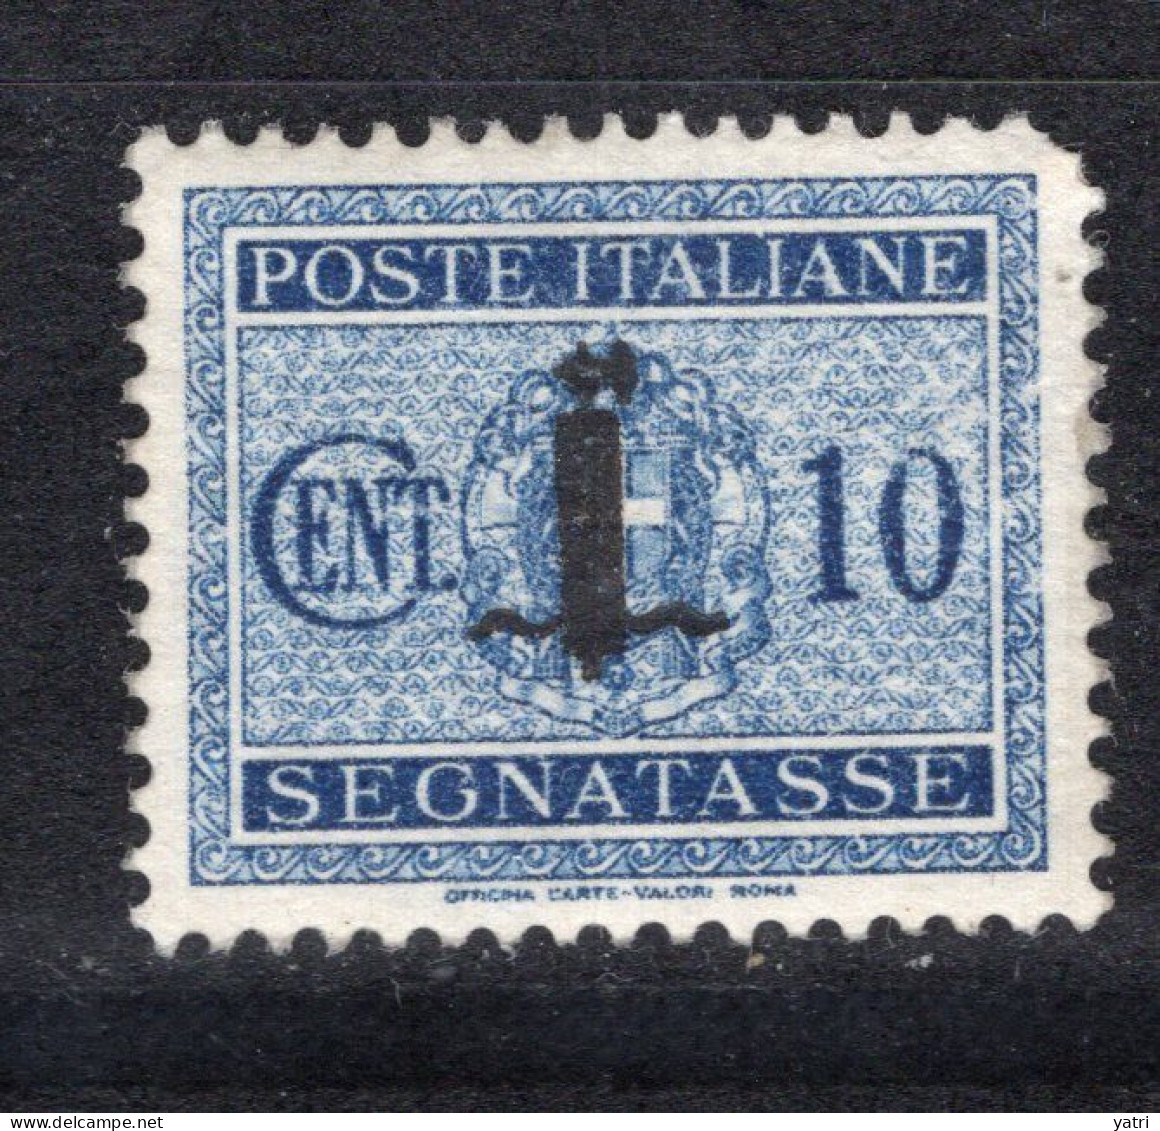 Repubblica Sociale Italiana - Segnatasse 10 Centesimi * MH - Postage Due